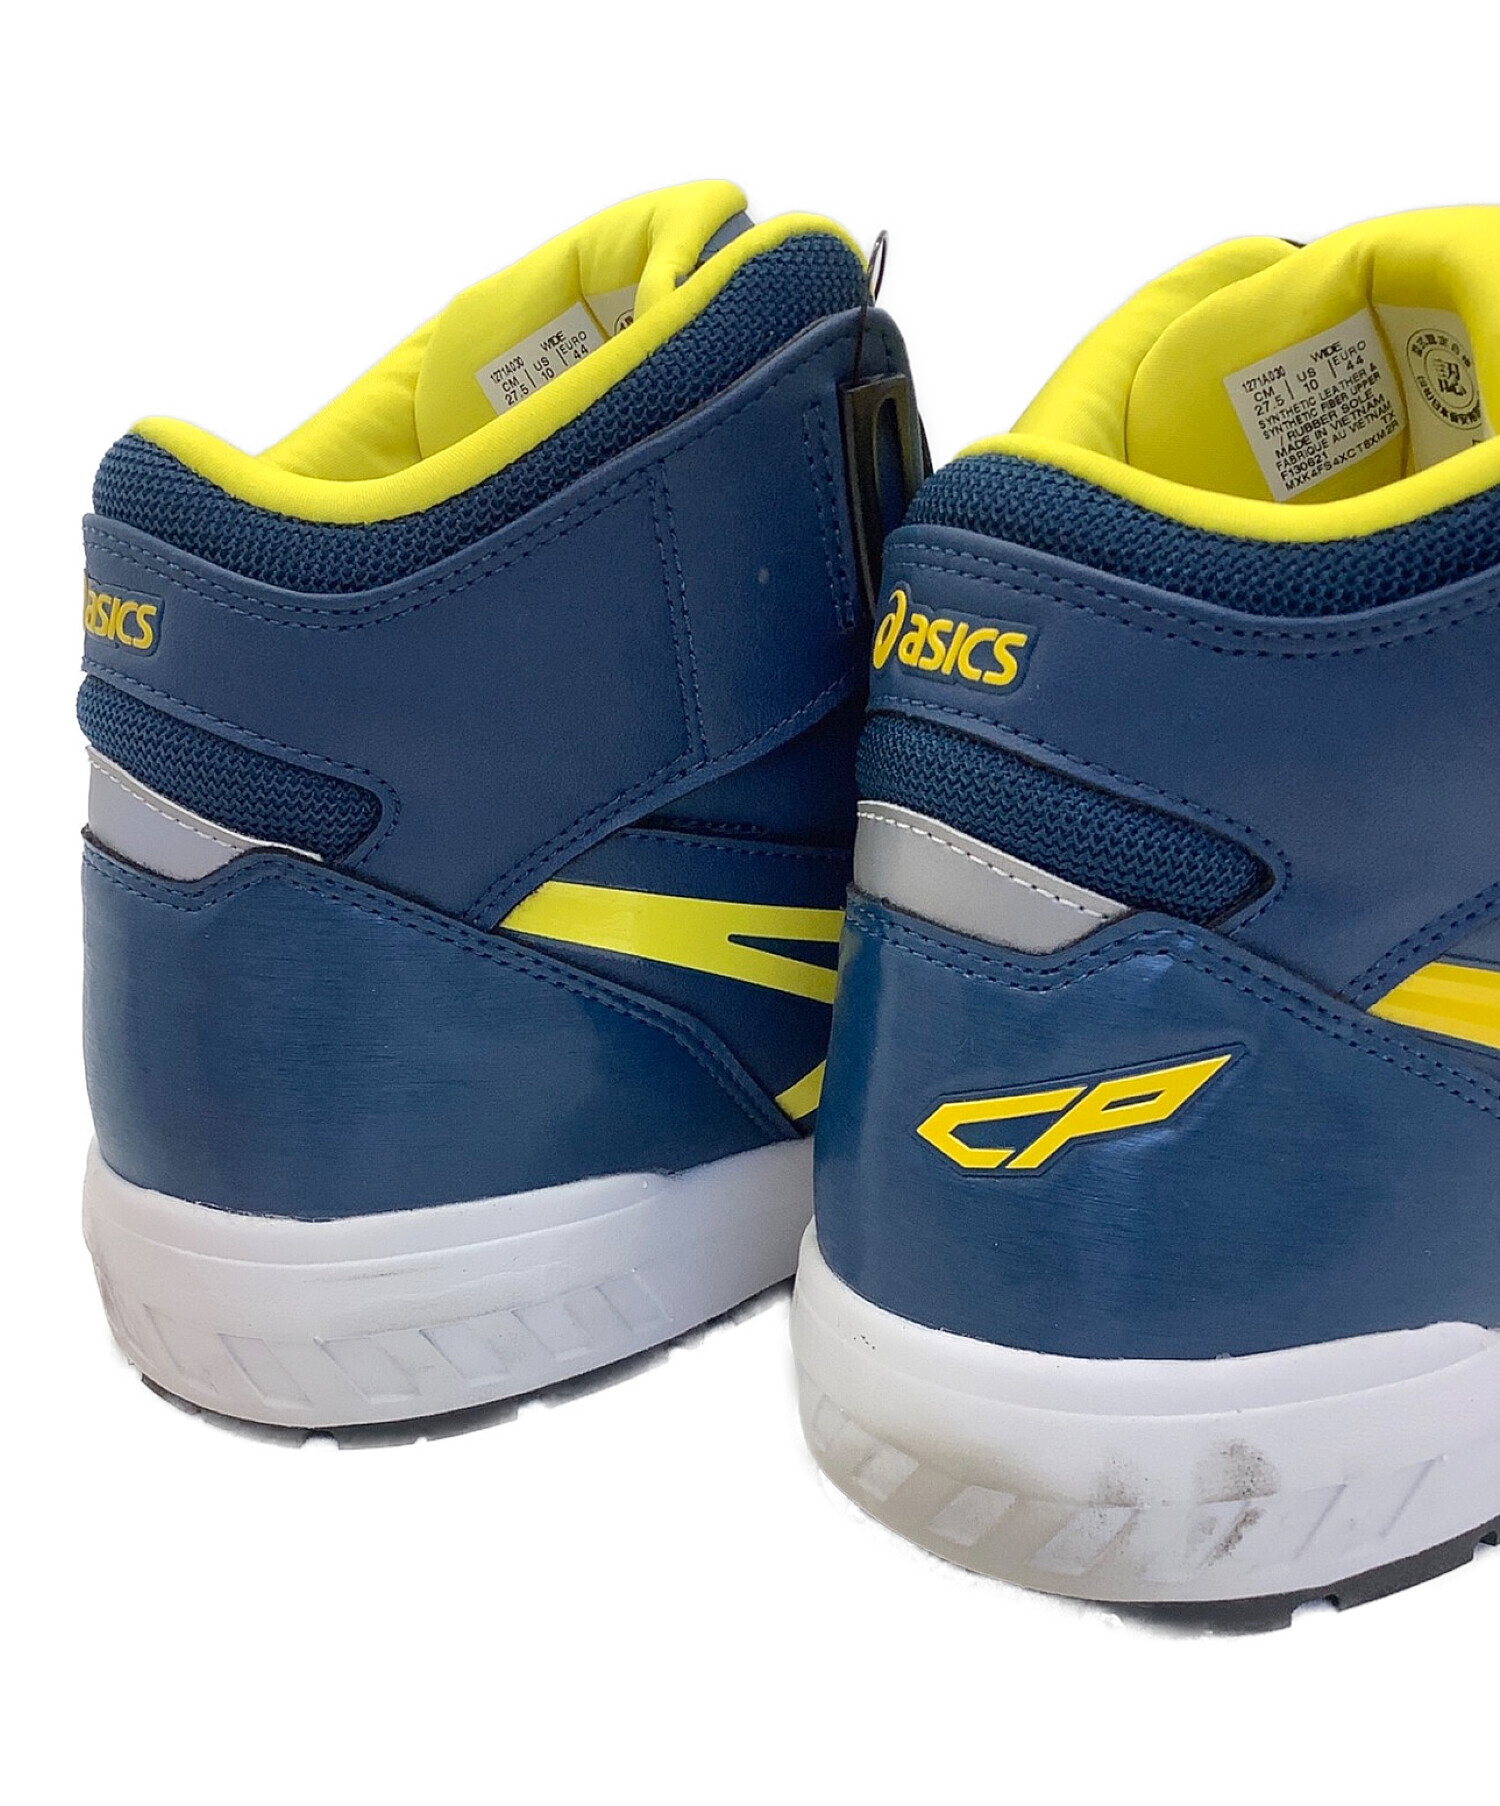 asics (アシックス) 安全靴 ネイビー サイズ:27.5cm